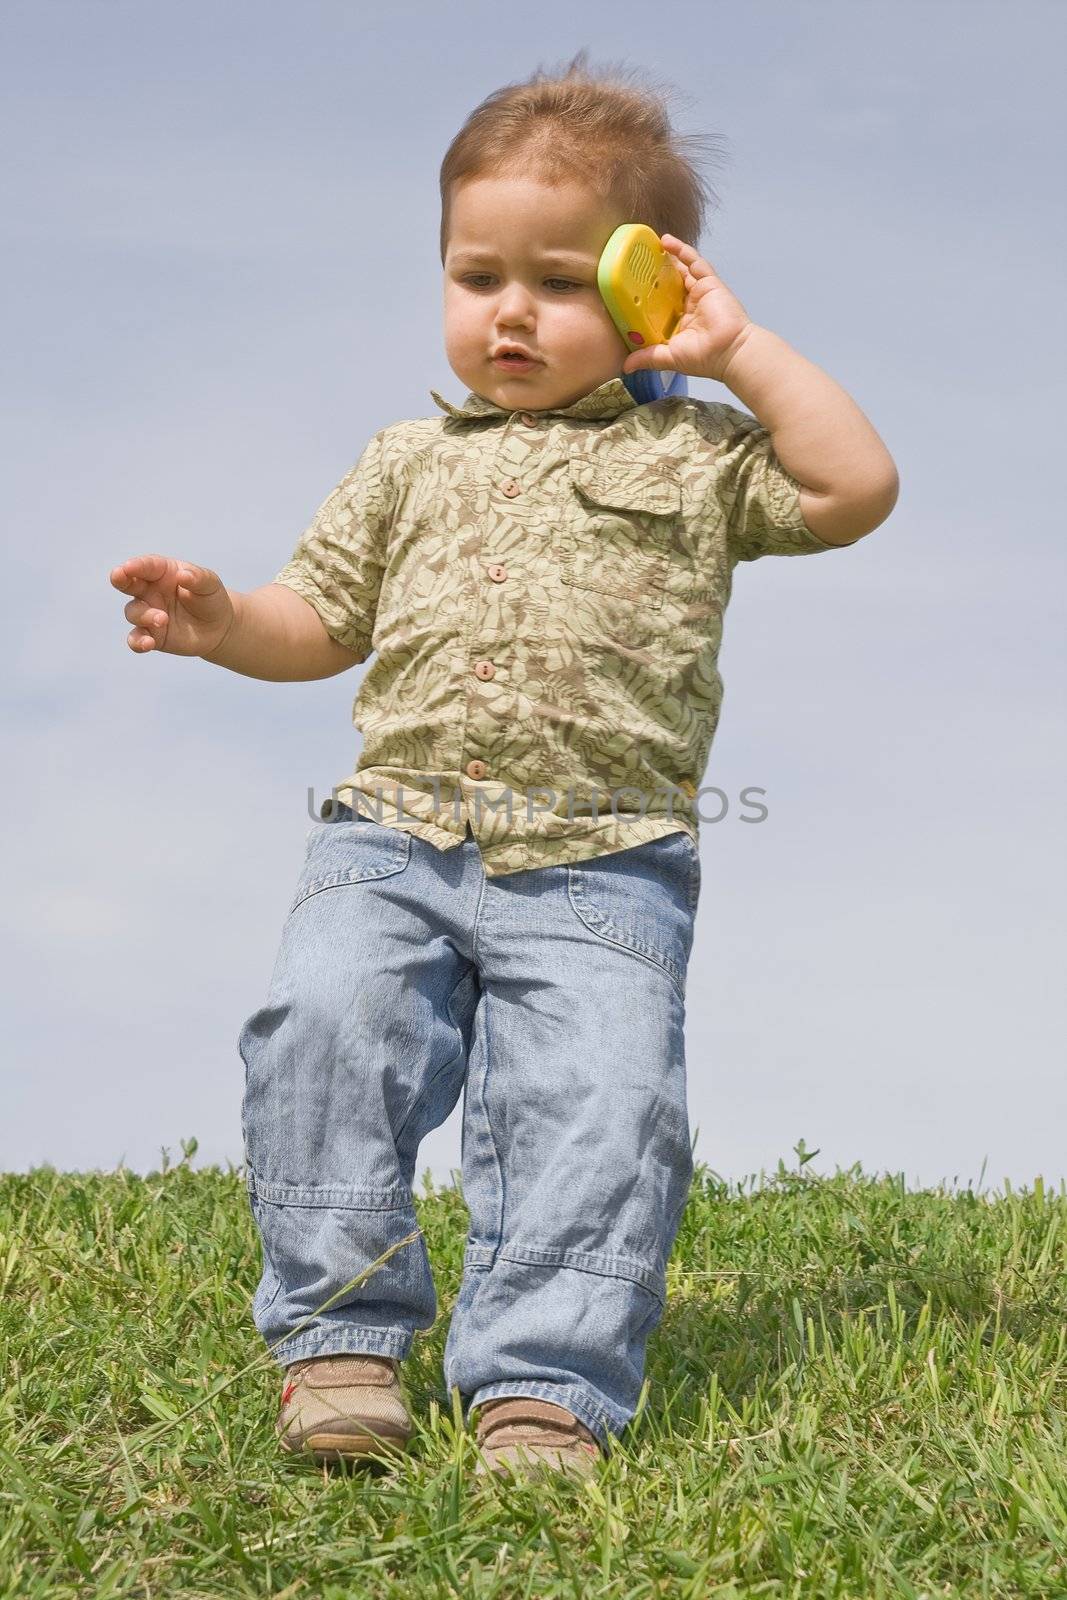 Little boy holding a toy cellphone near his ear